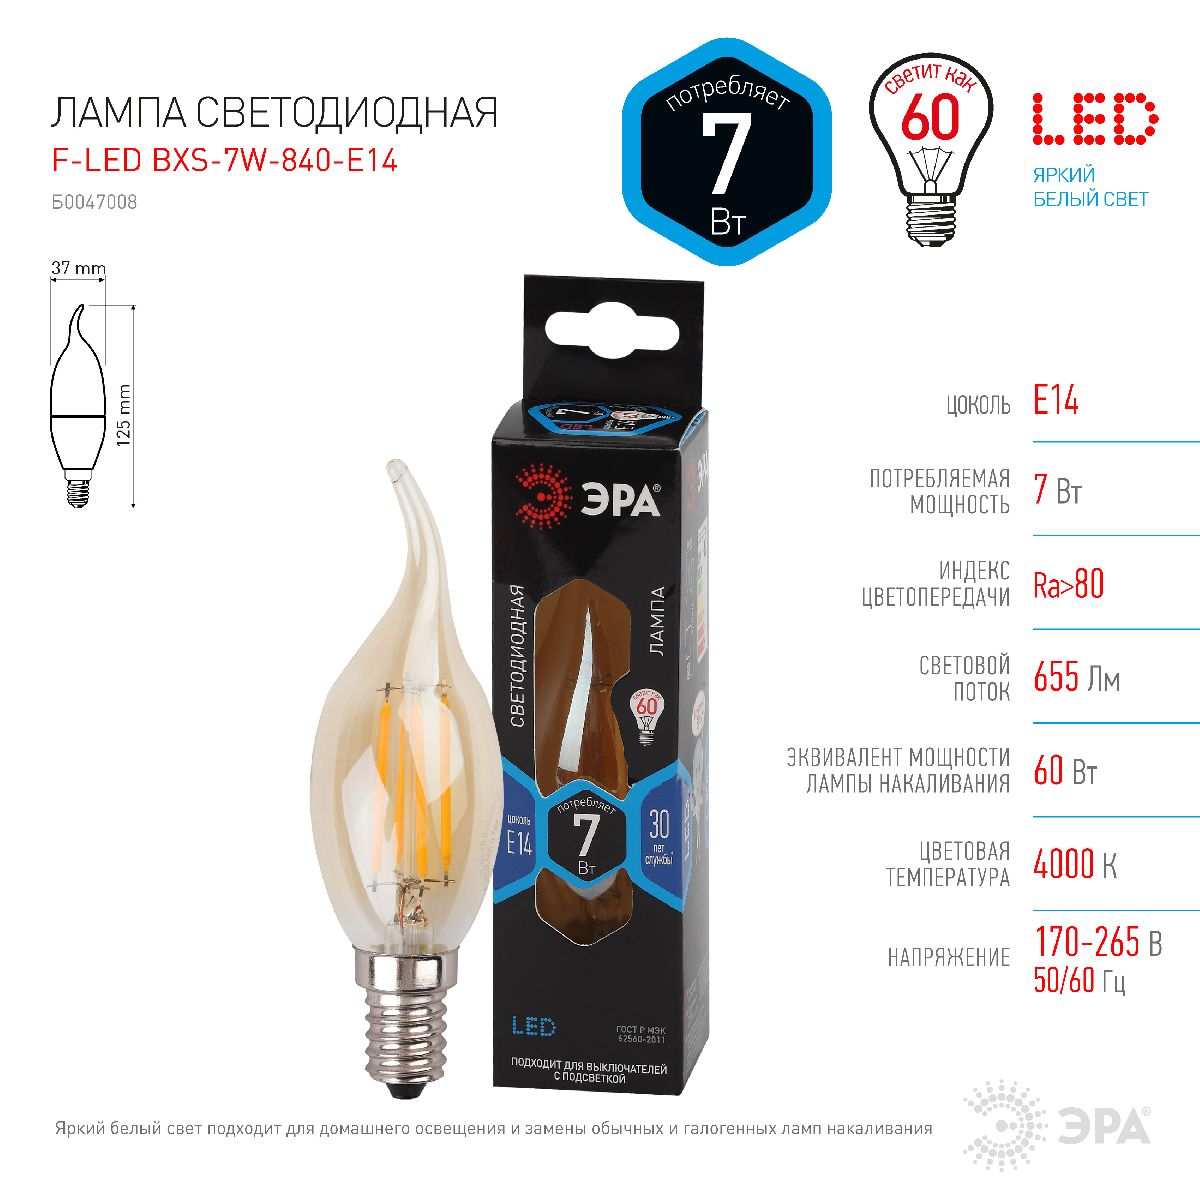 Лампа светодиодная Эра E14 7W 4000K F-LED BXS-7W-840-E14 gold Б0047008